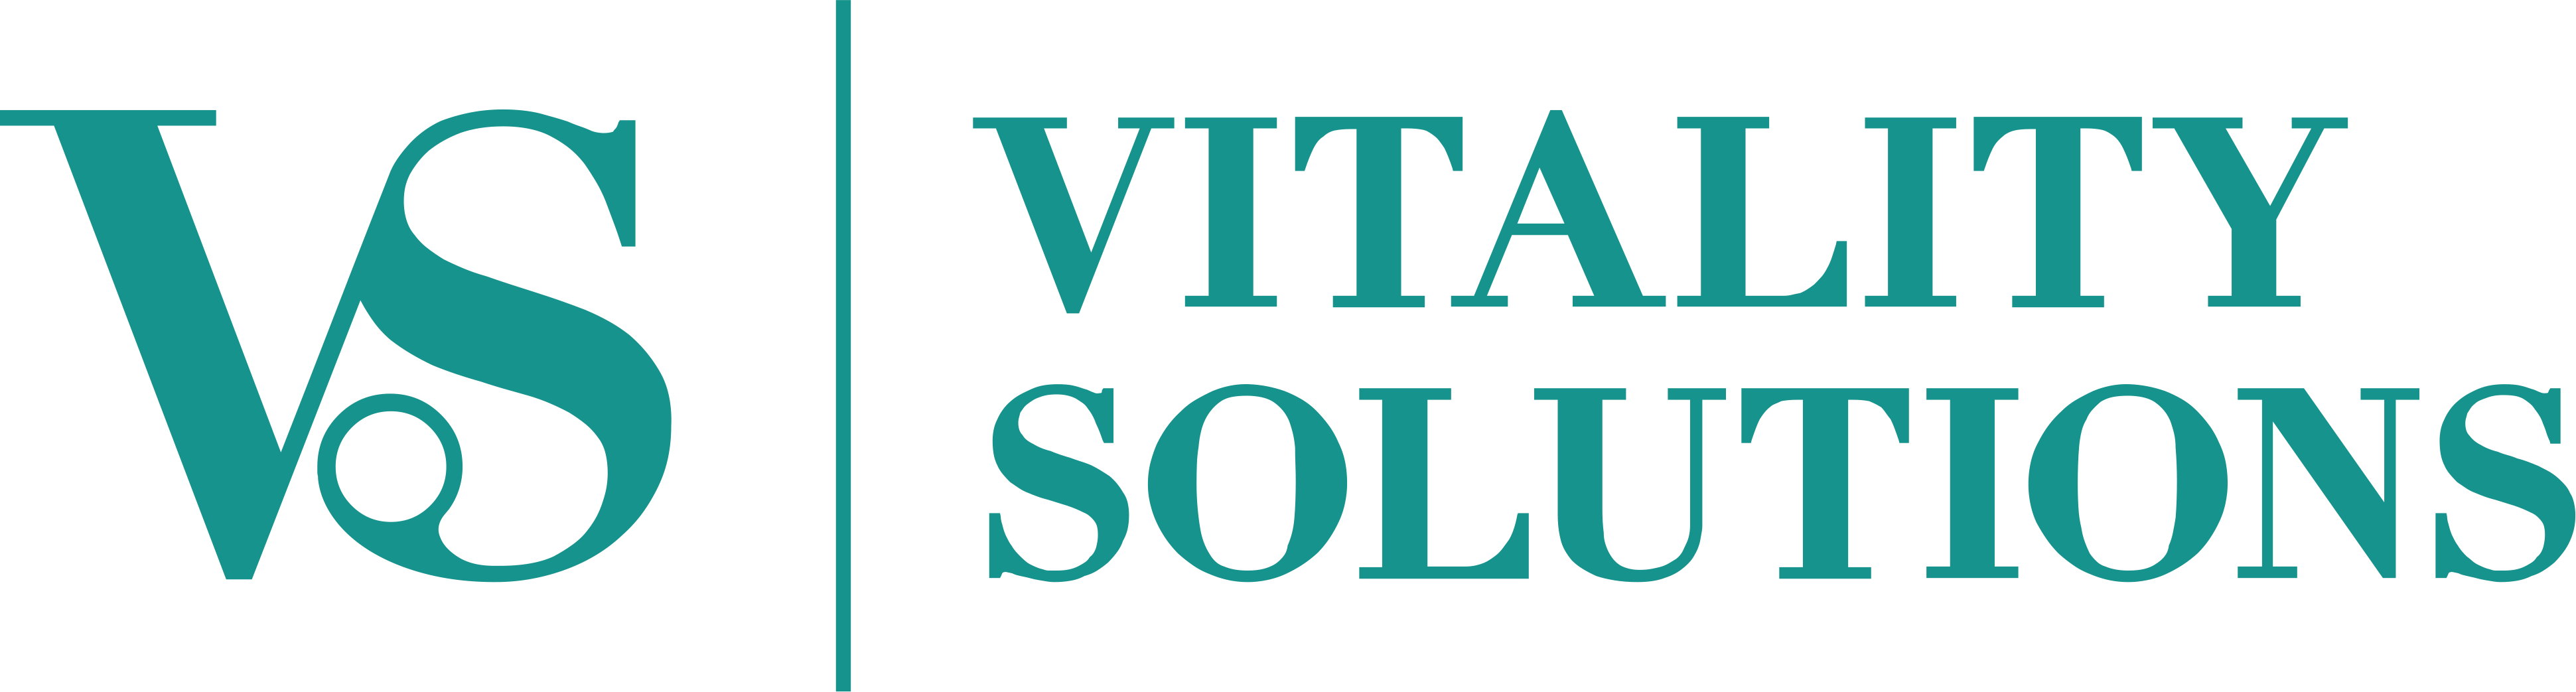 Vitality Solutions logo